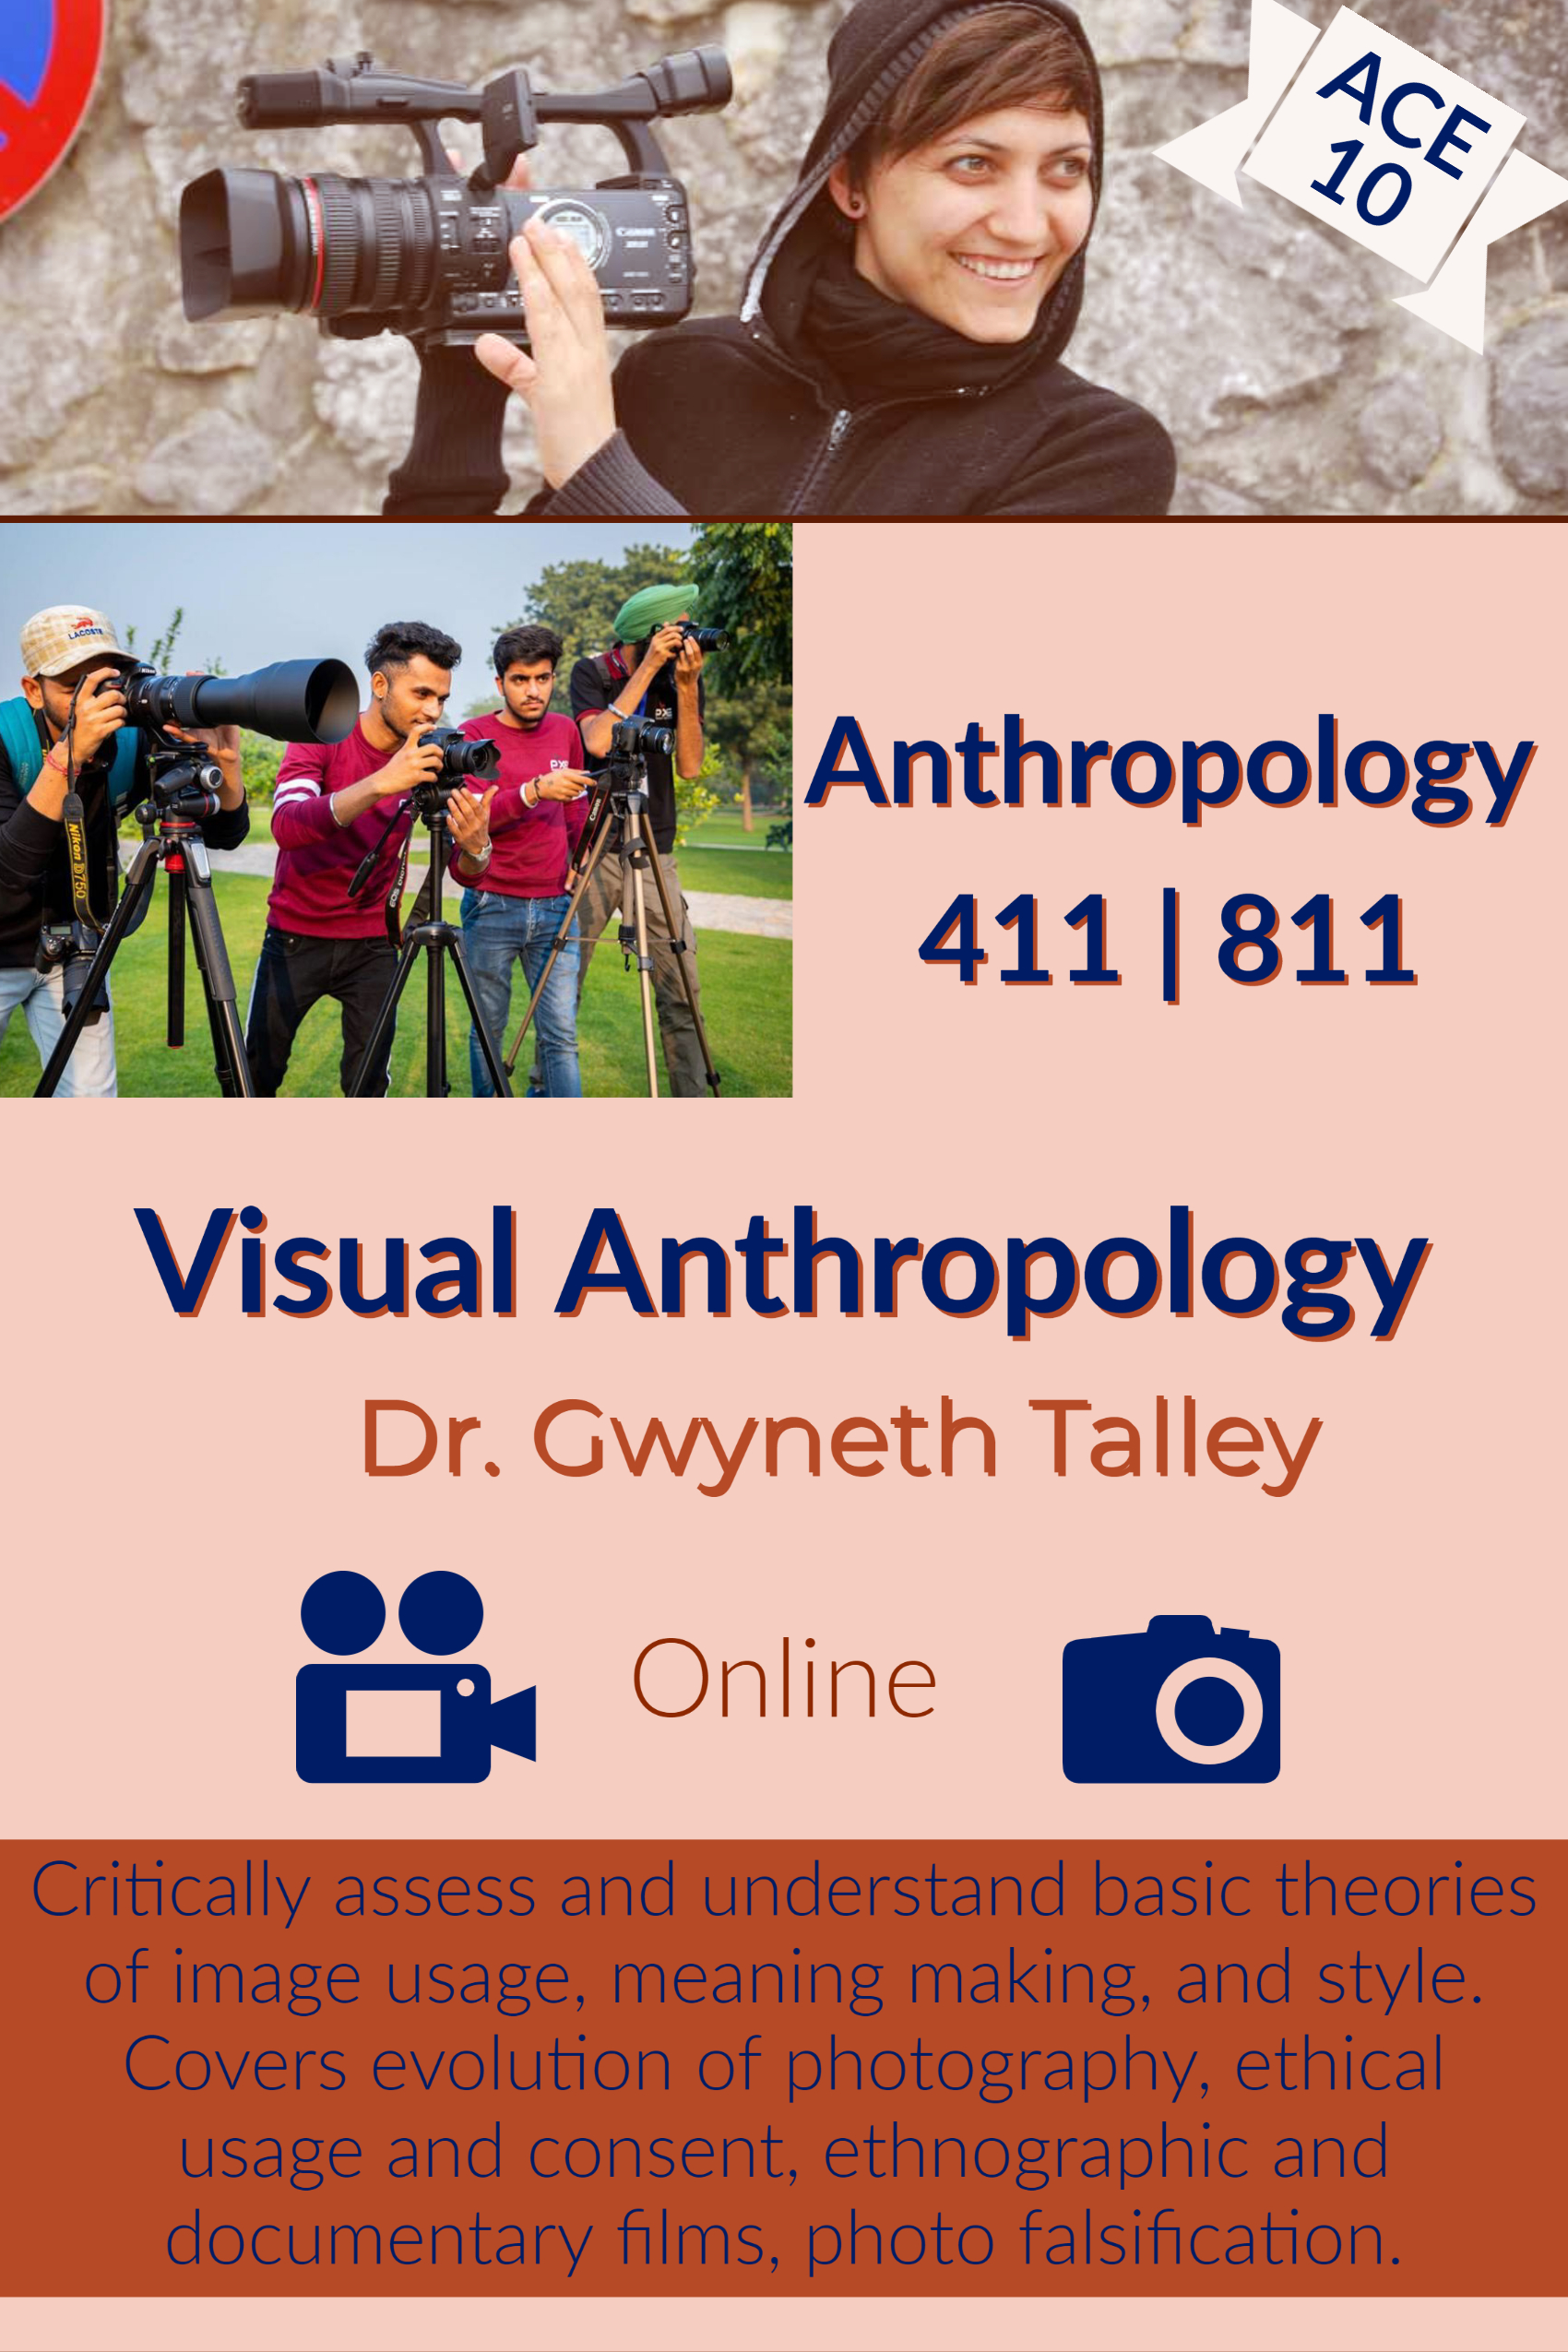 ANTH 411: Visual Anthropology